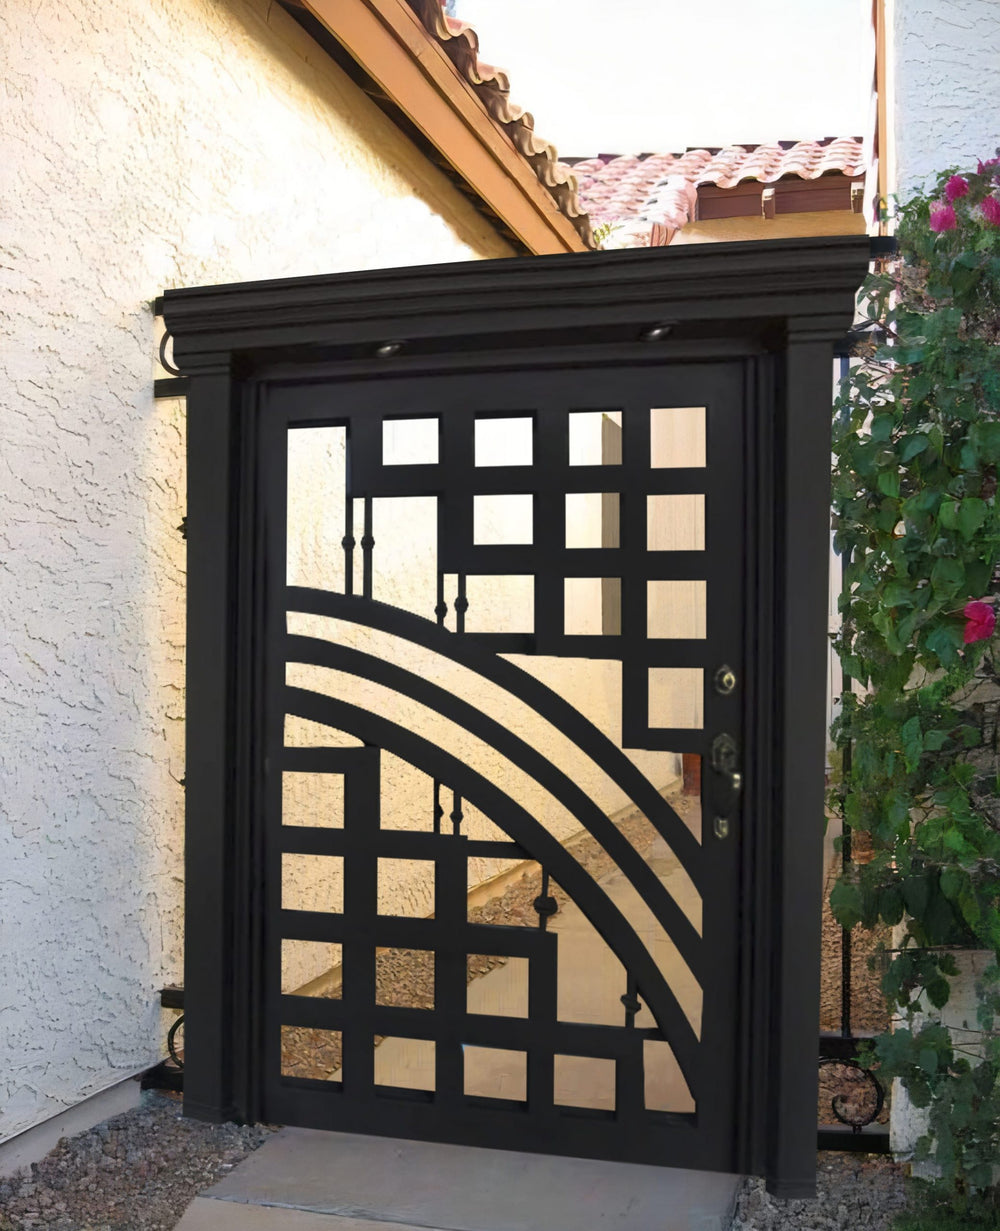 Stunning Square Box Design Metal Gate | Custom Fabrication Metal Garden Gate | Made in Canada – Model # 307